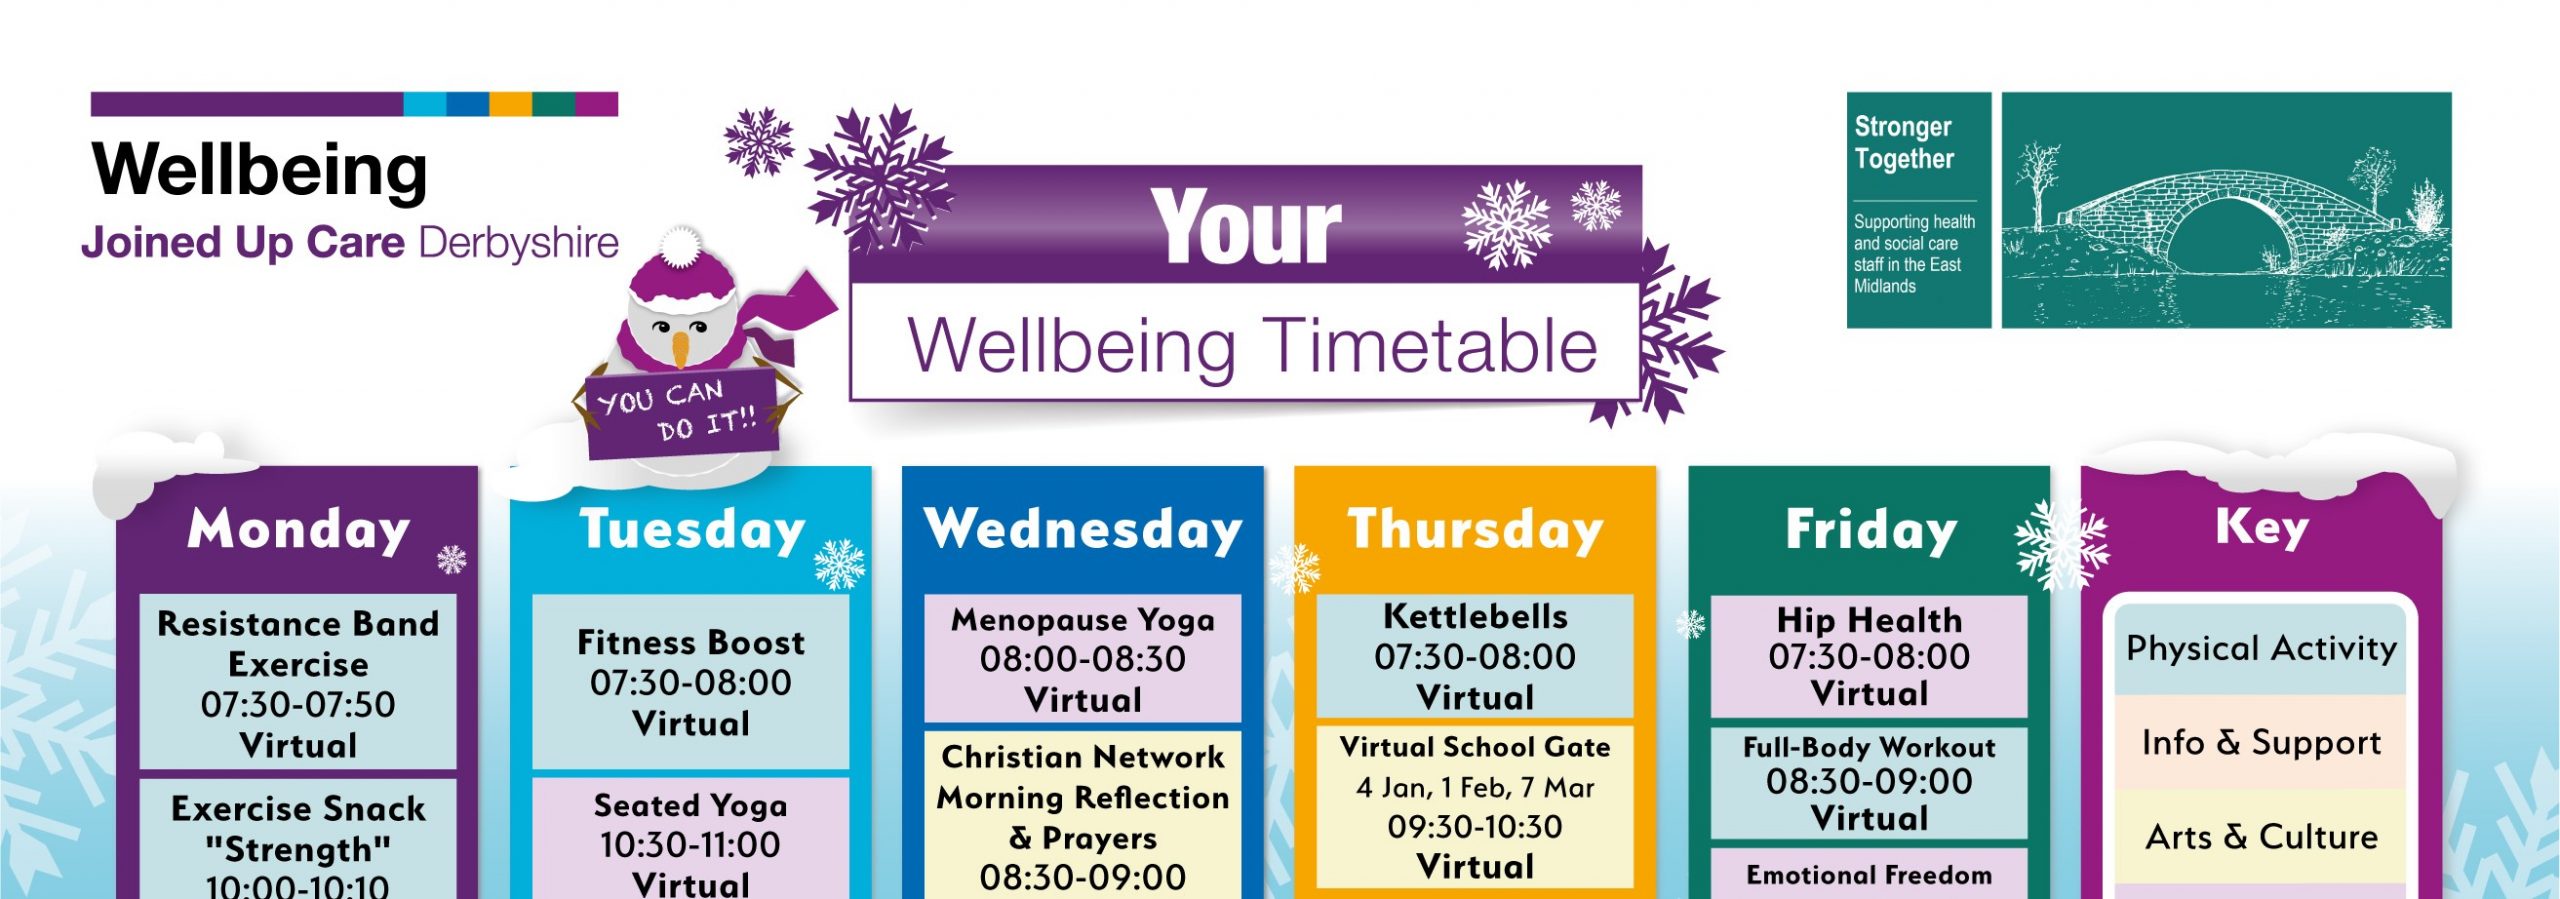 Winter Wellbeing Timetable header